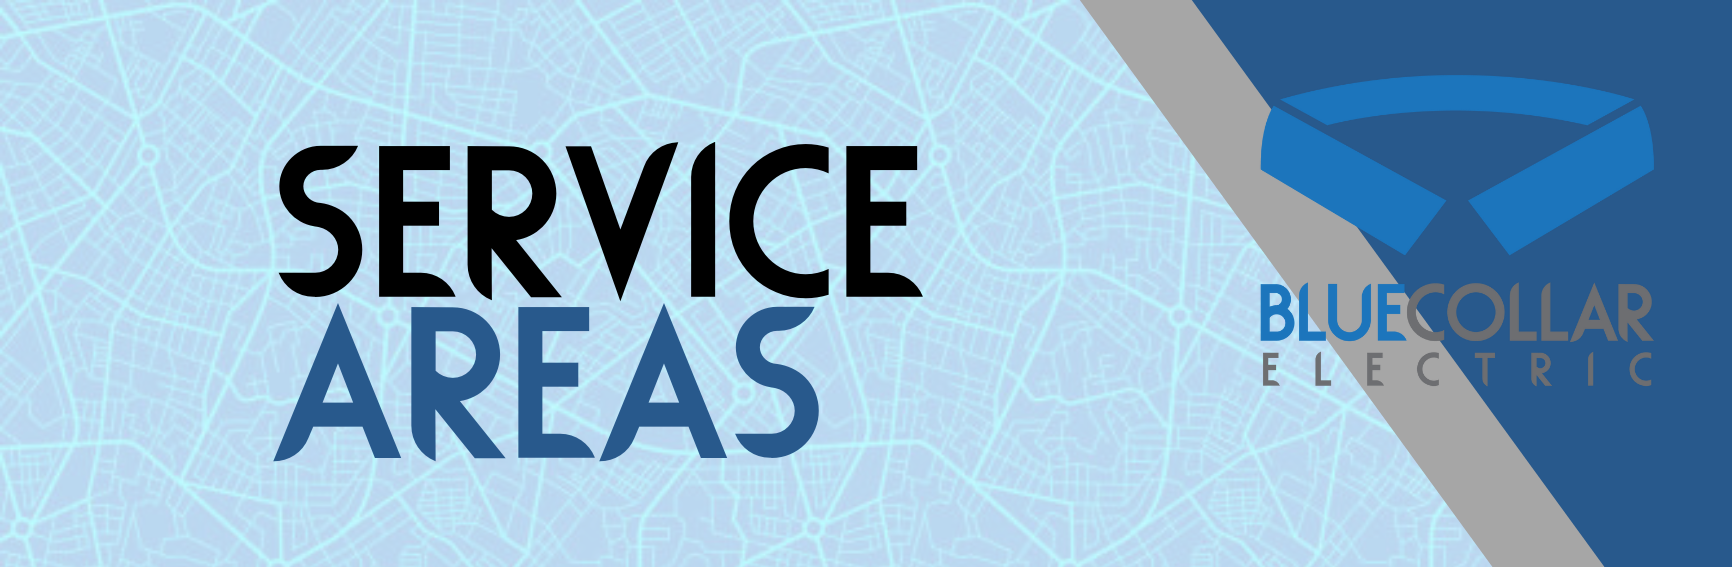 Service Areas - Blue Collar Electric